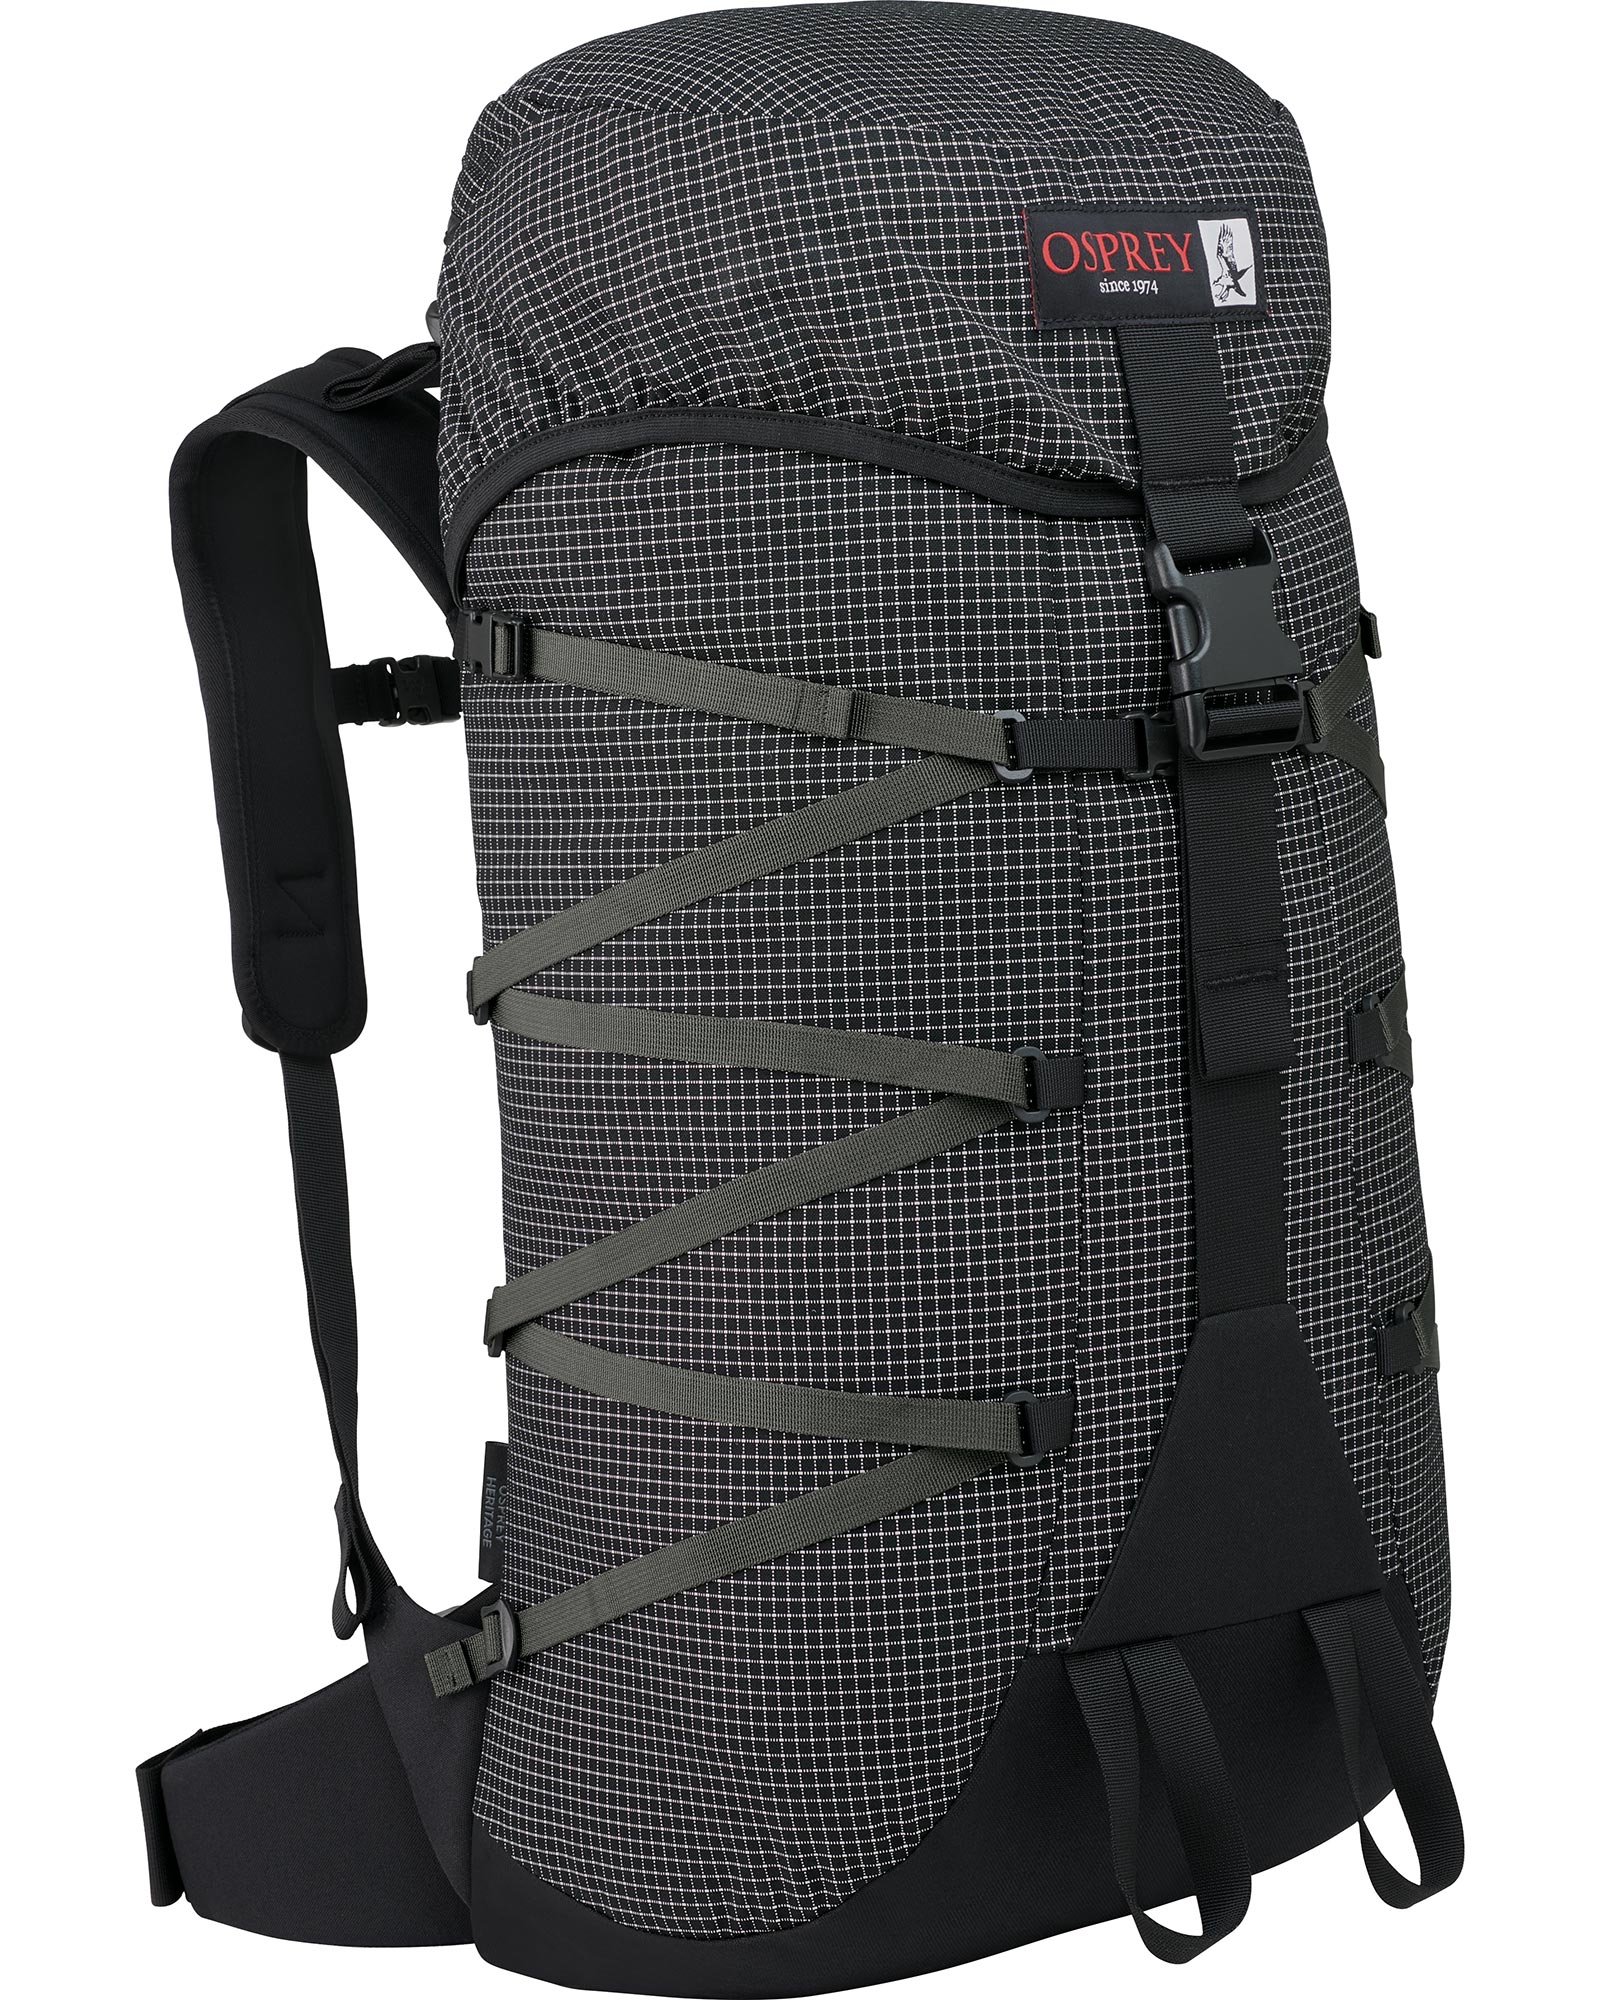 Osprey Aether 30 Nanofly Backpack